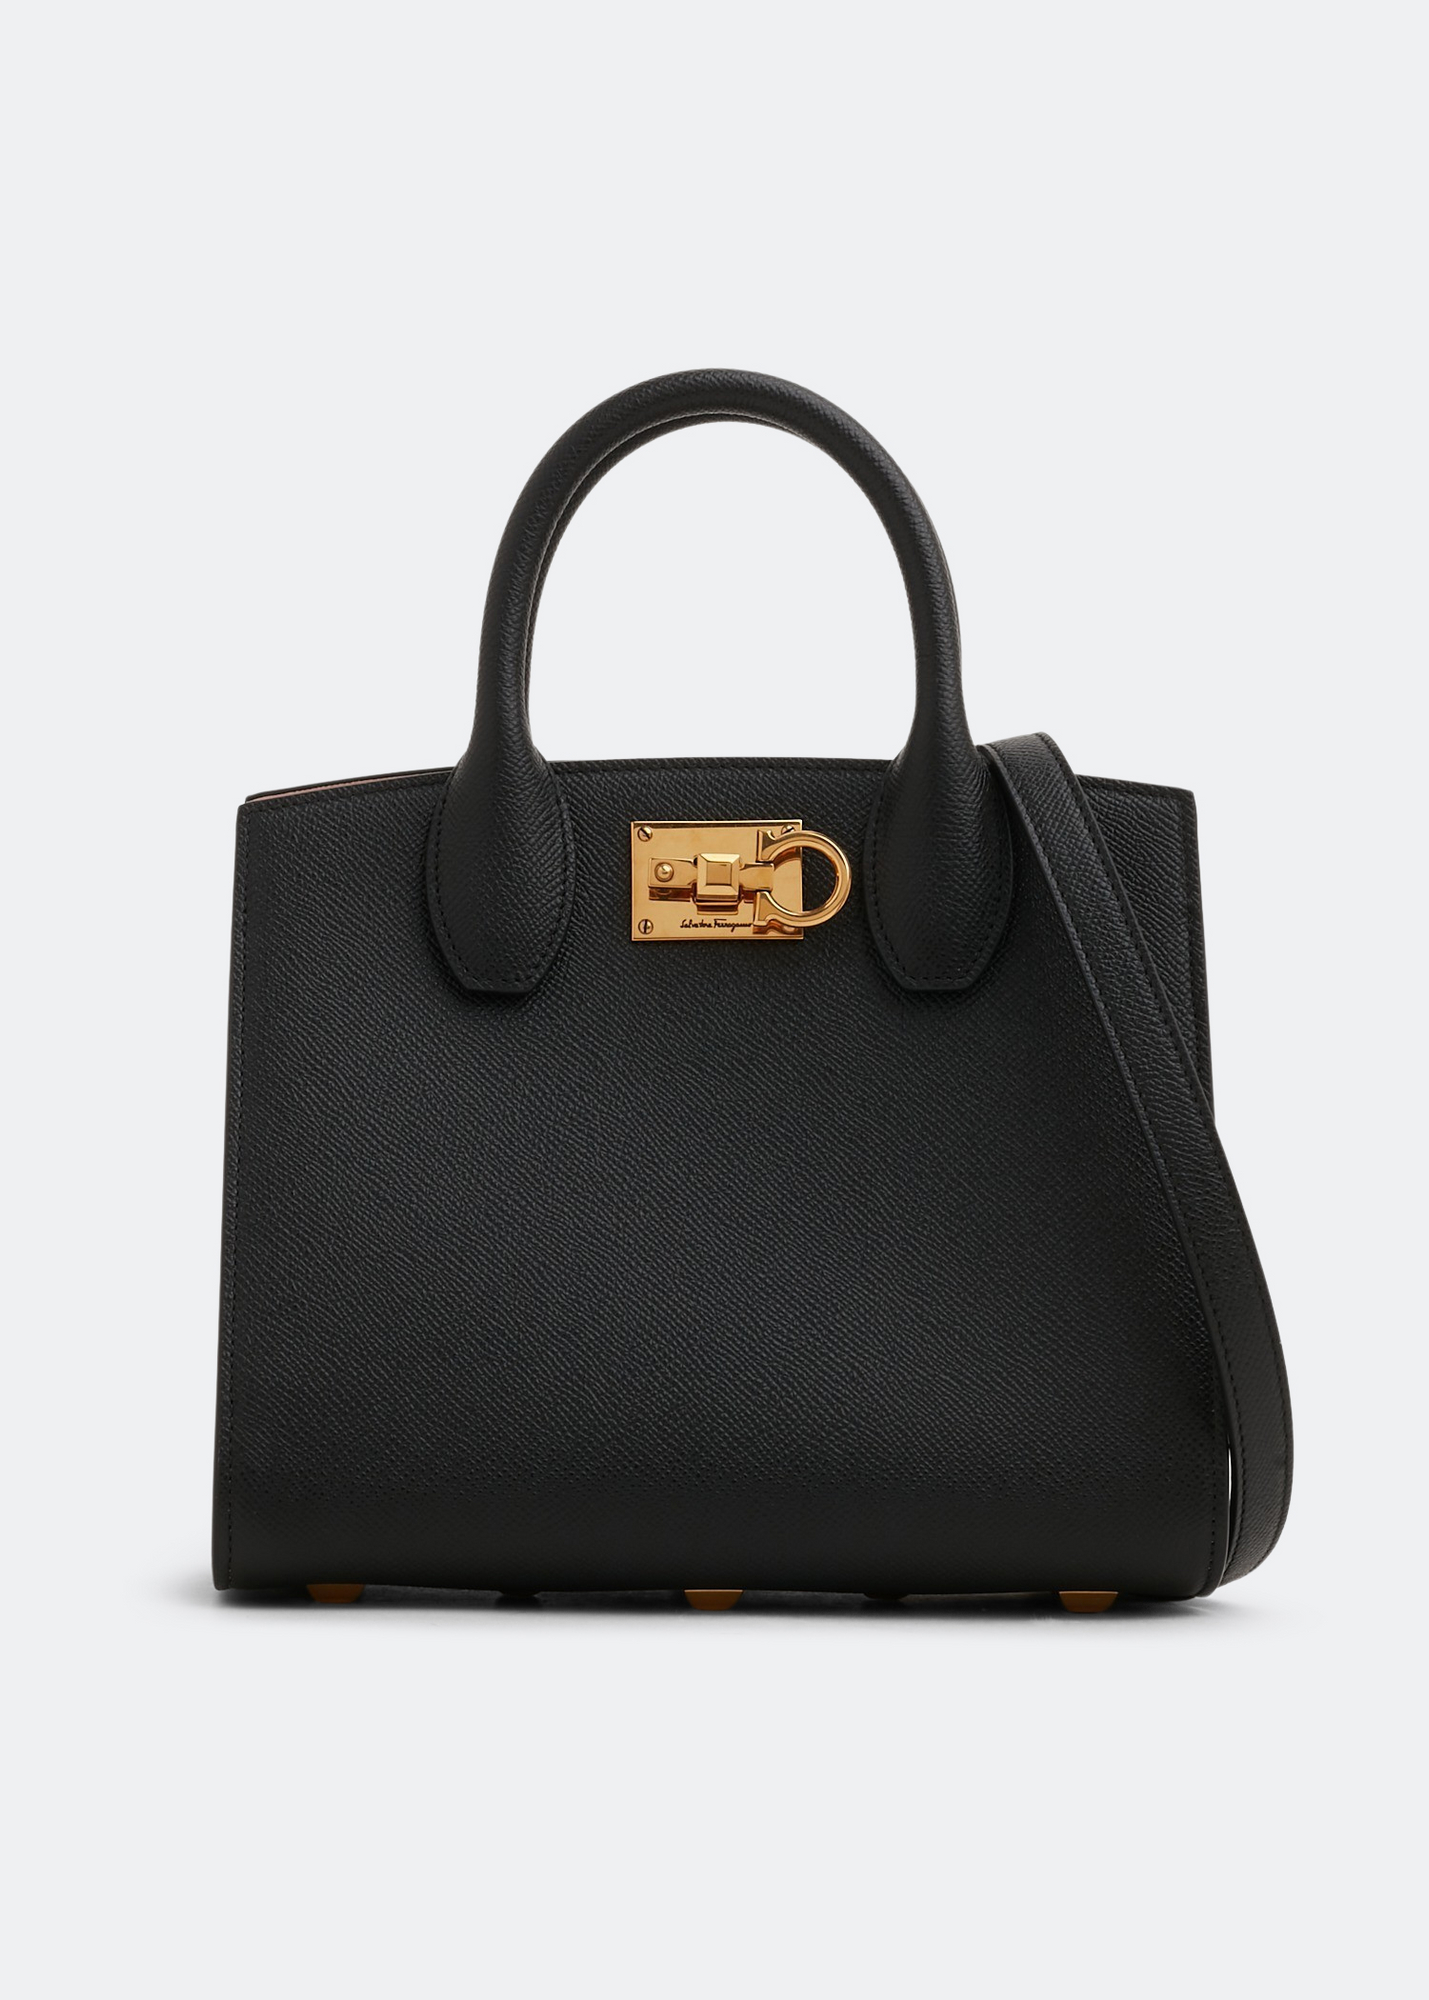 Ferragamo Studio Box bag for Women - Black in KSA | Level Shoes